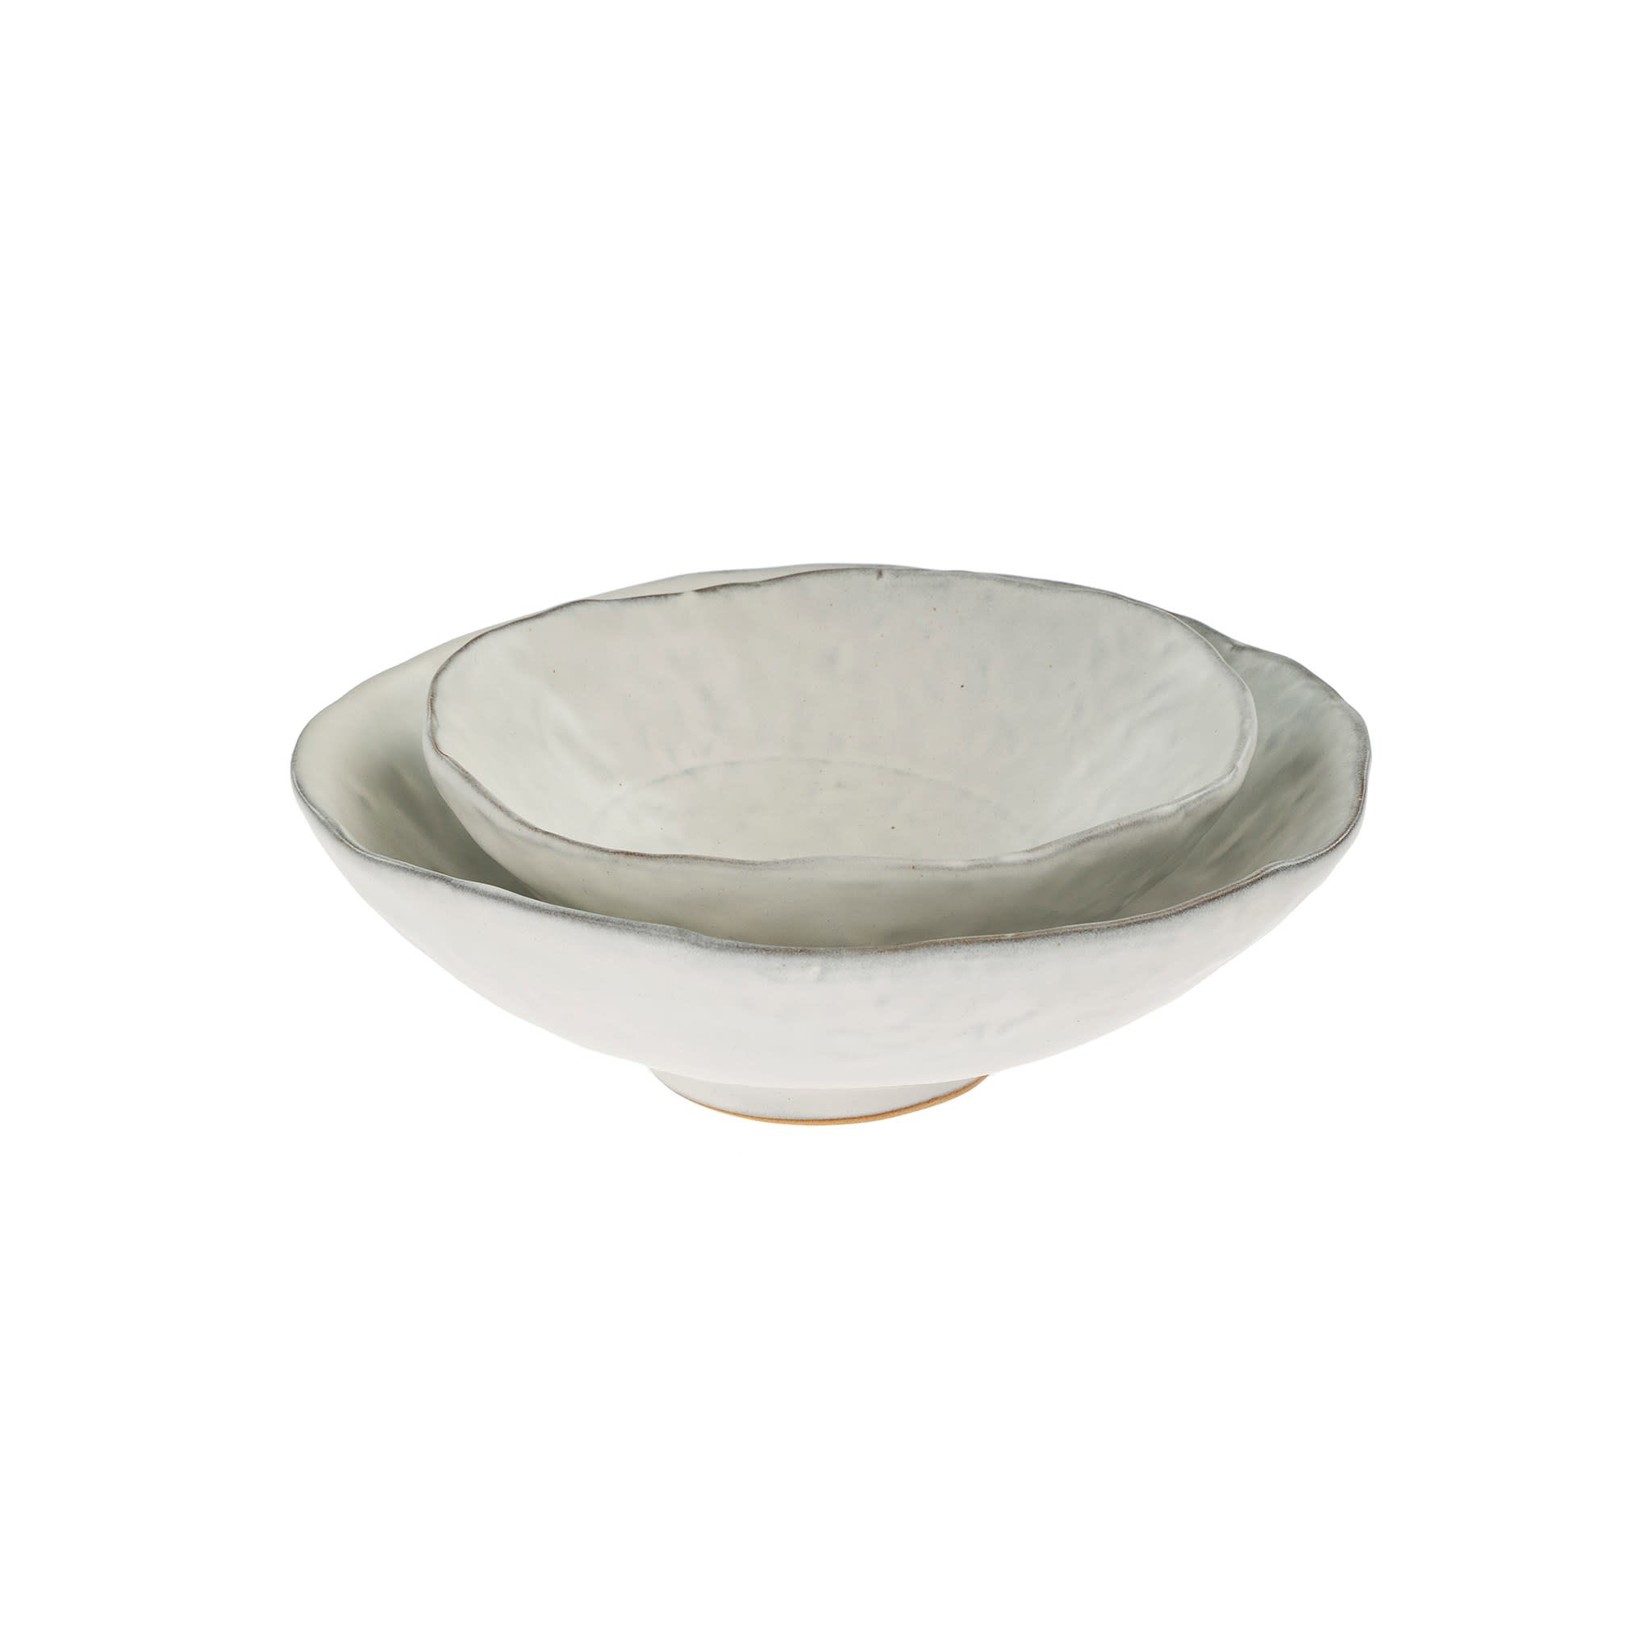 Indaba Pebble Bowl - Small - 5.5"D